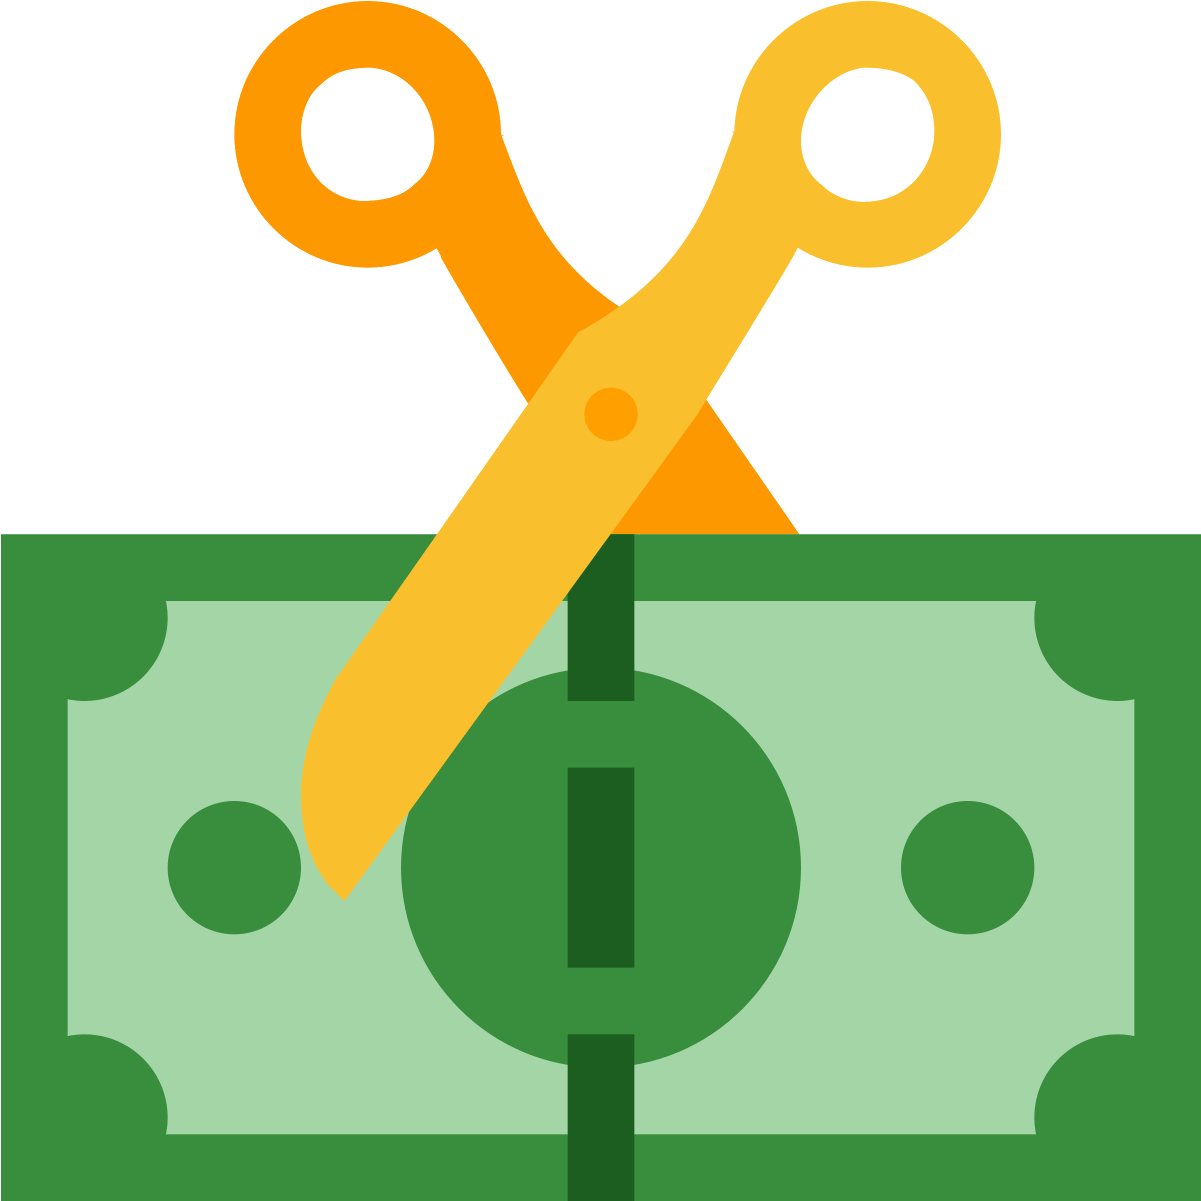 A Green And Yellow Scissors Cutting A Dollar Bill